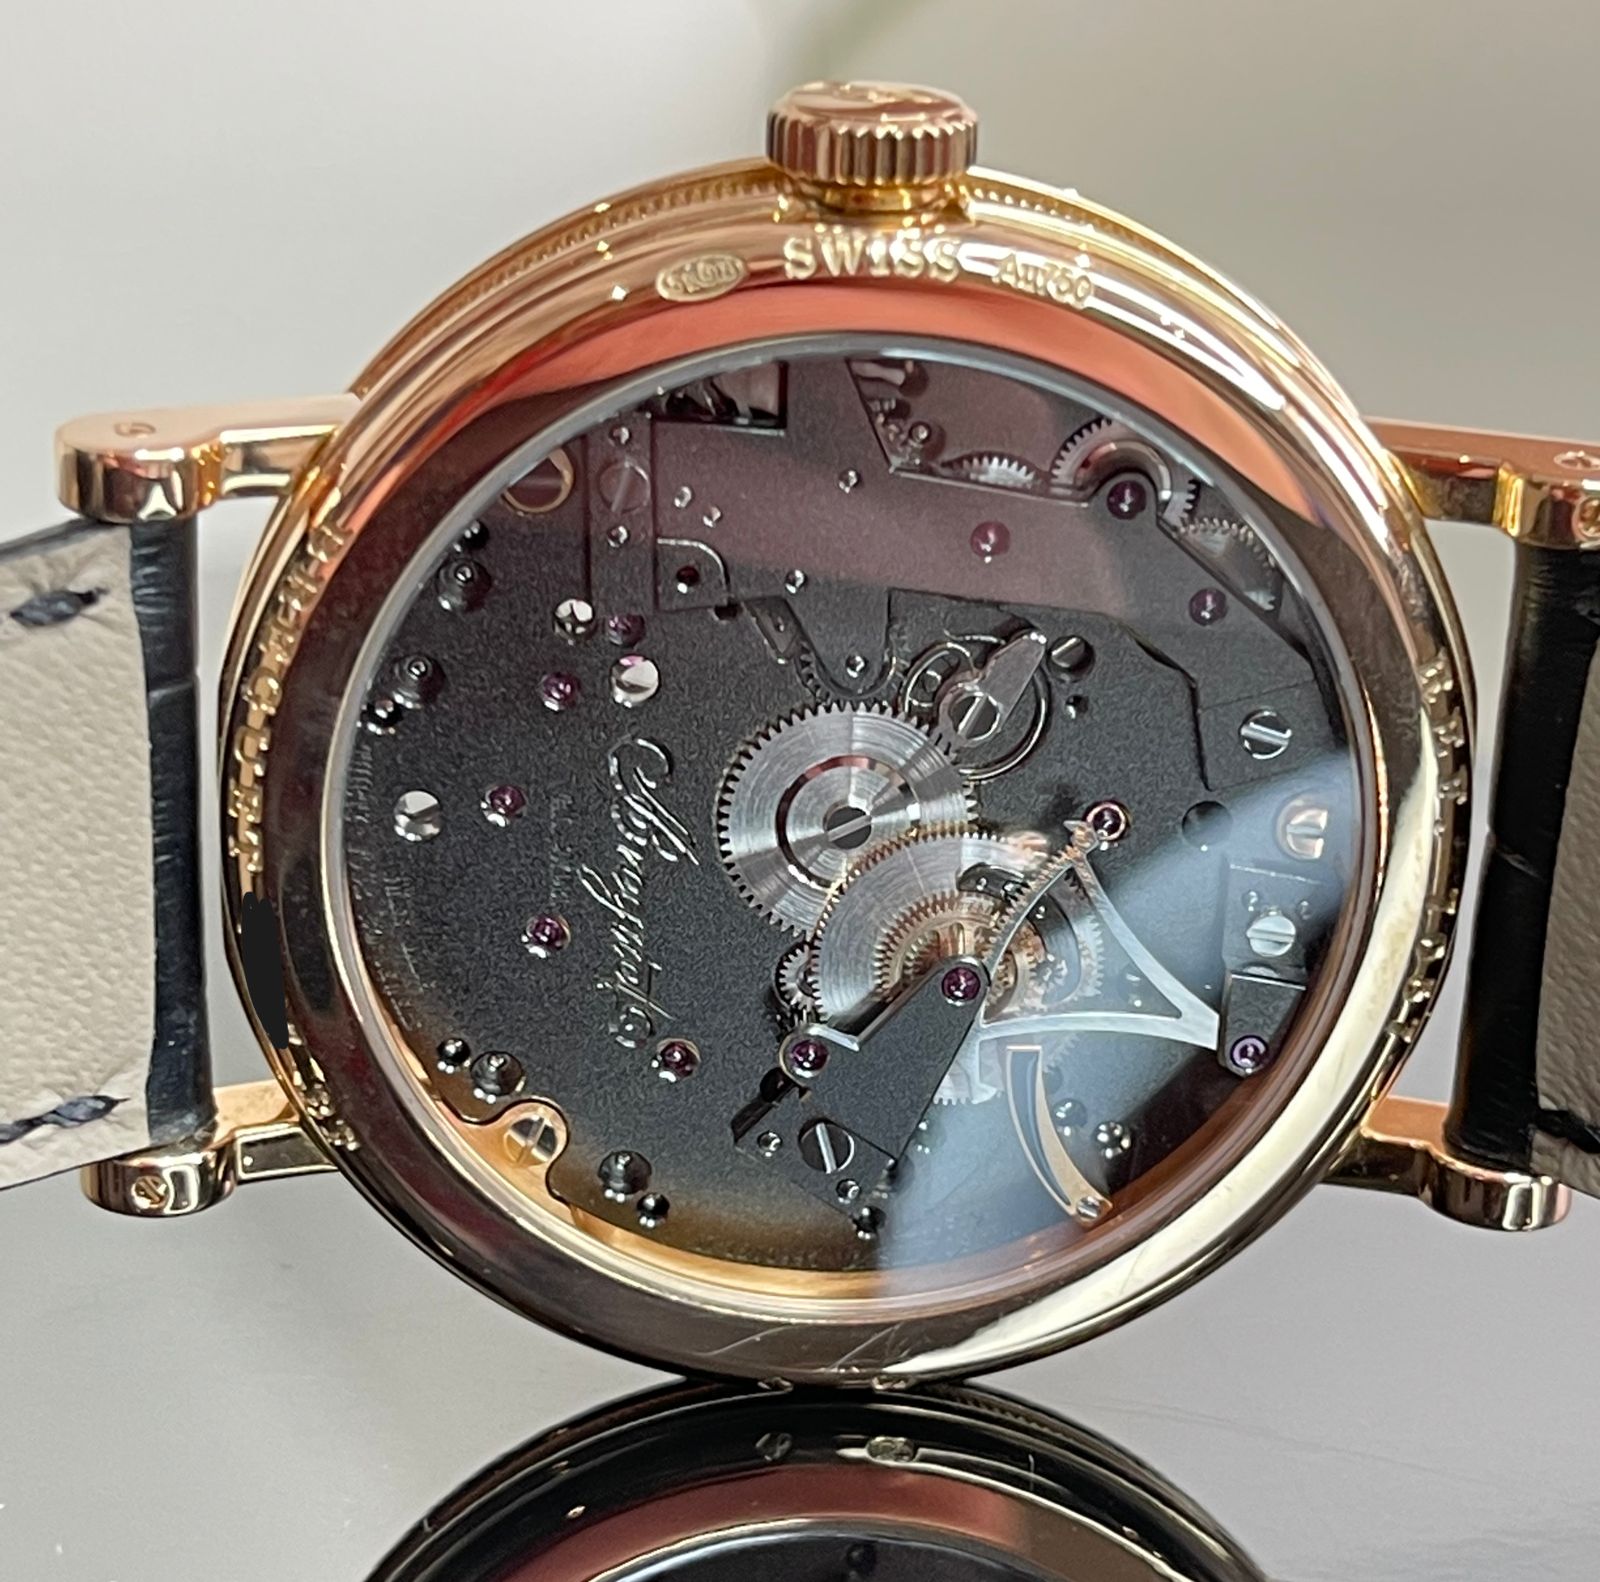 Швейцарские часы Breguet Tradition. 7057 7057BR/G9/9W6 #5